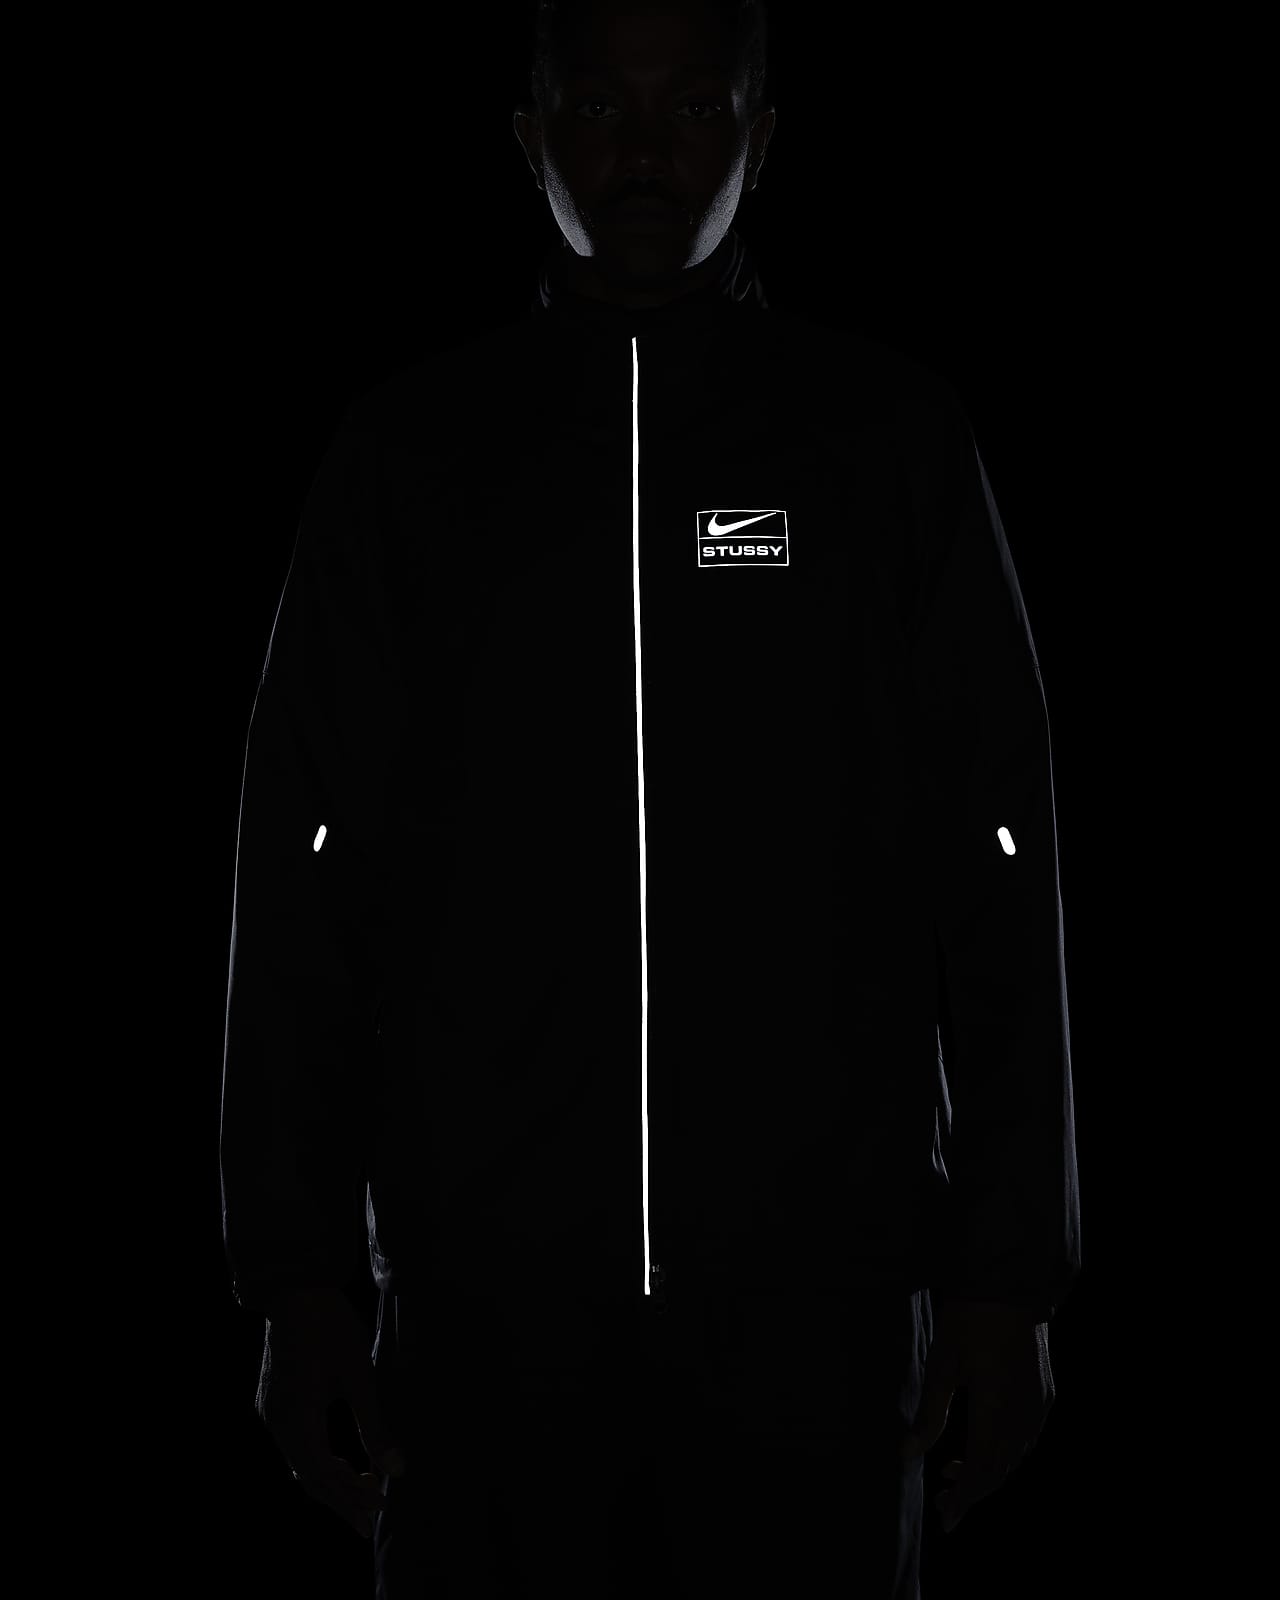 Nike Stussy Leather Jacket | laboratoriomaradona.com.ar